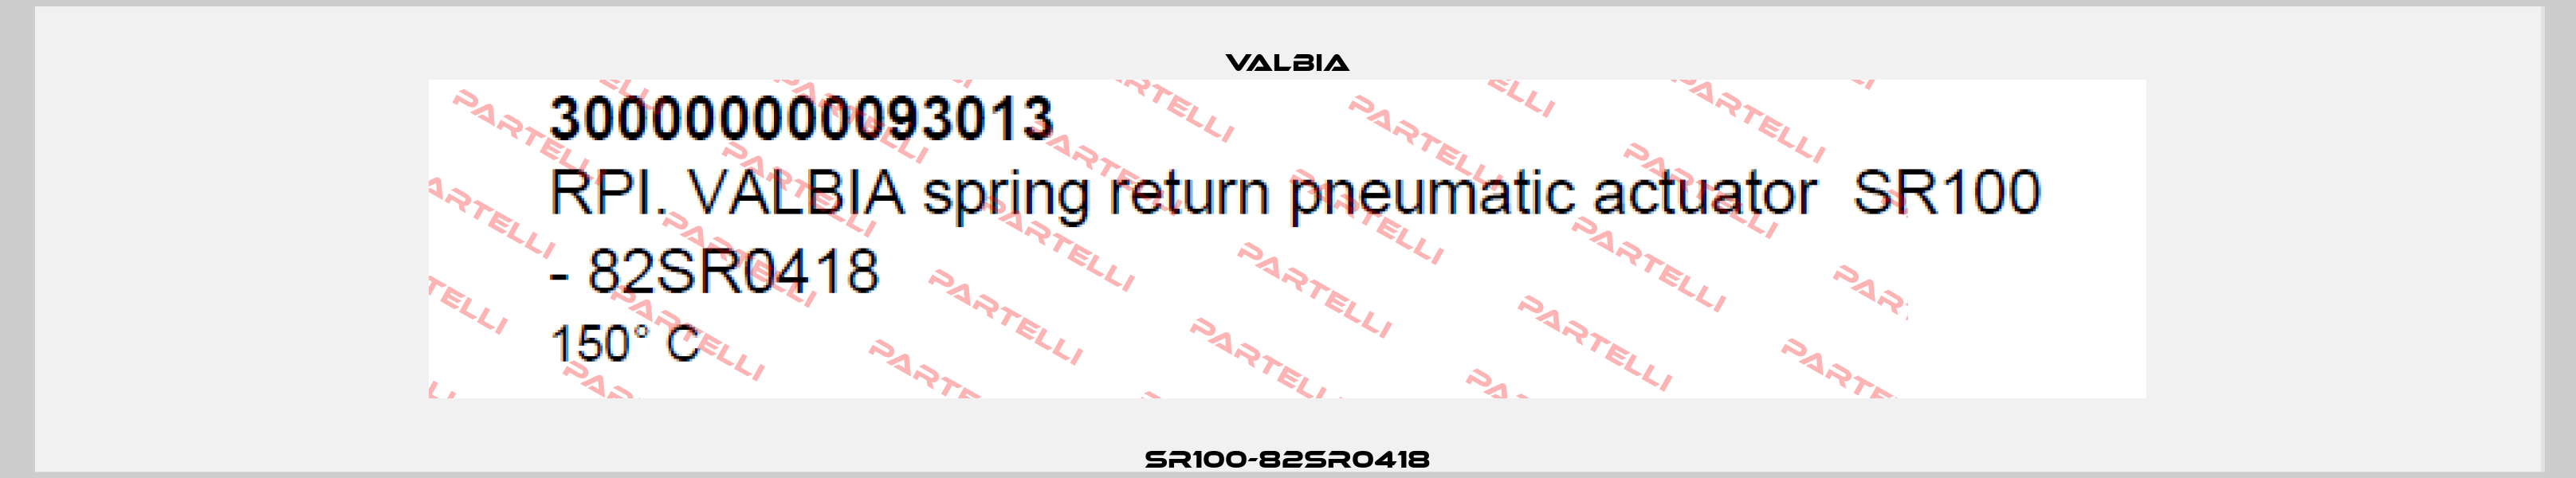 SR100-82SR0418 Valbia